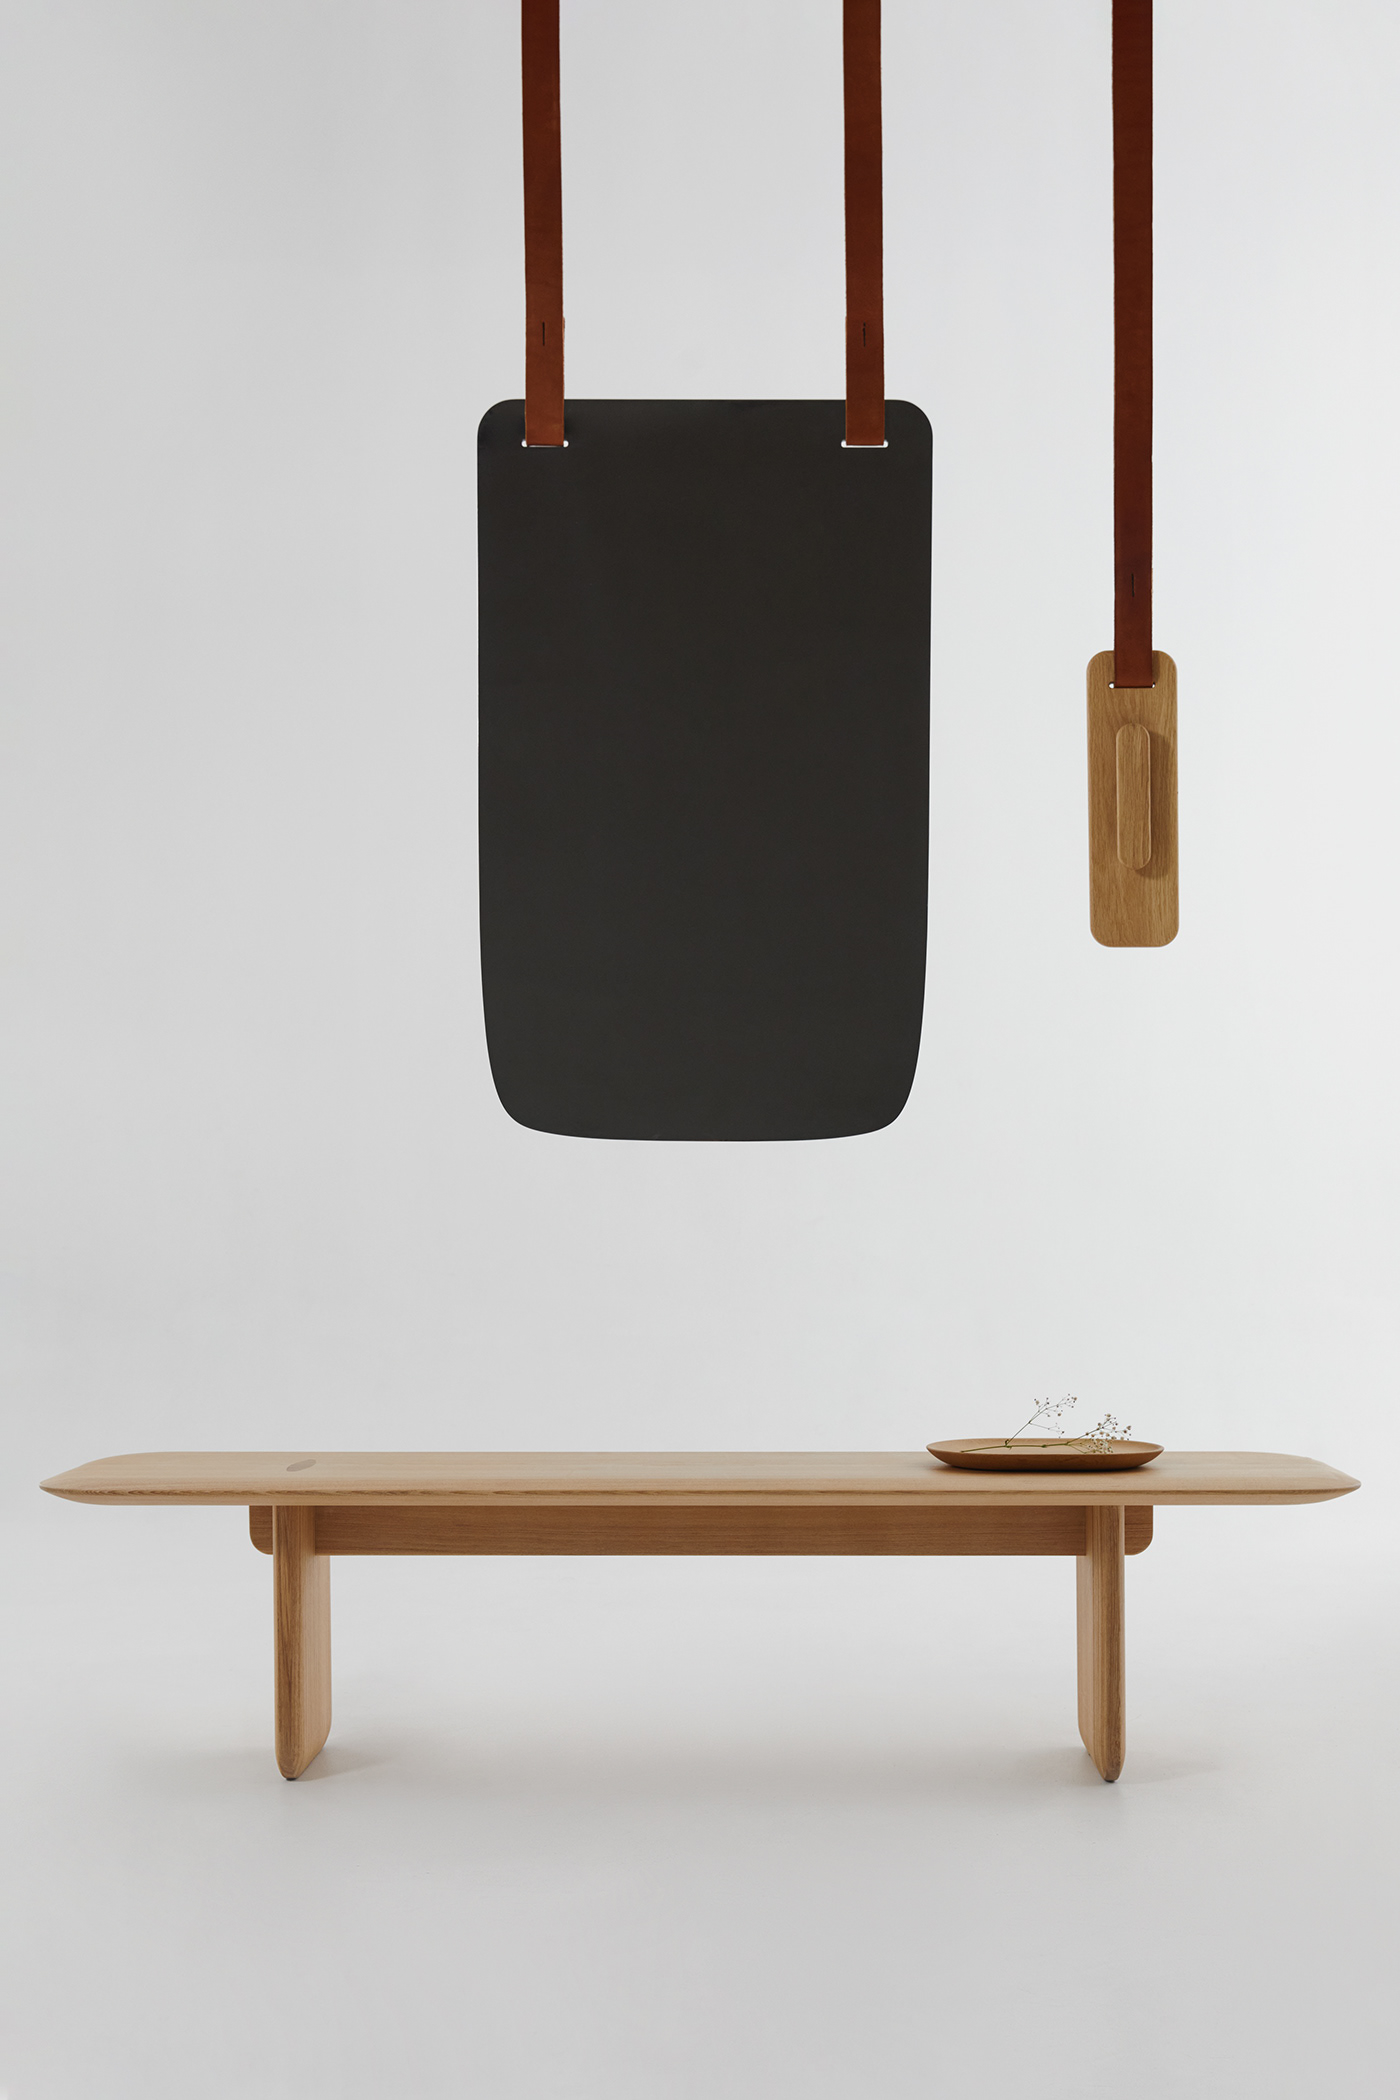 bench furniture furniture design  furnituredesign mirror public furniture wood wooden wooden design wooden furniture cnc